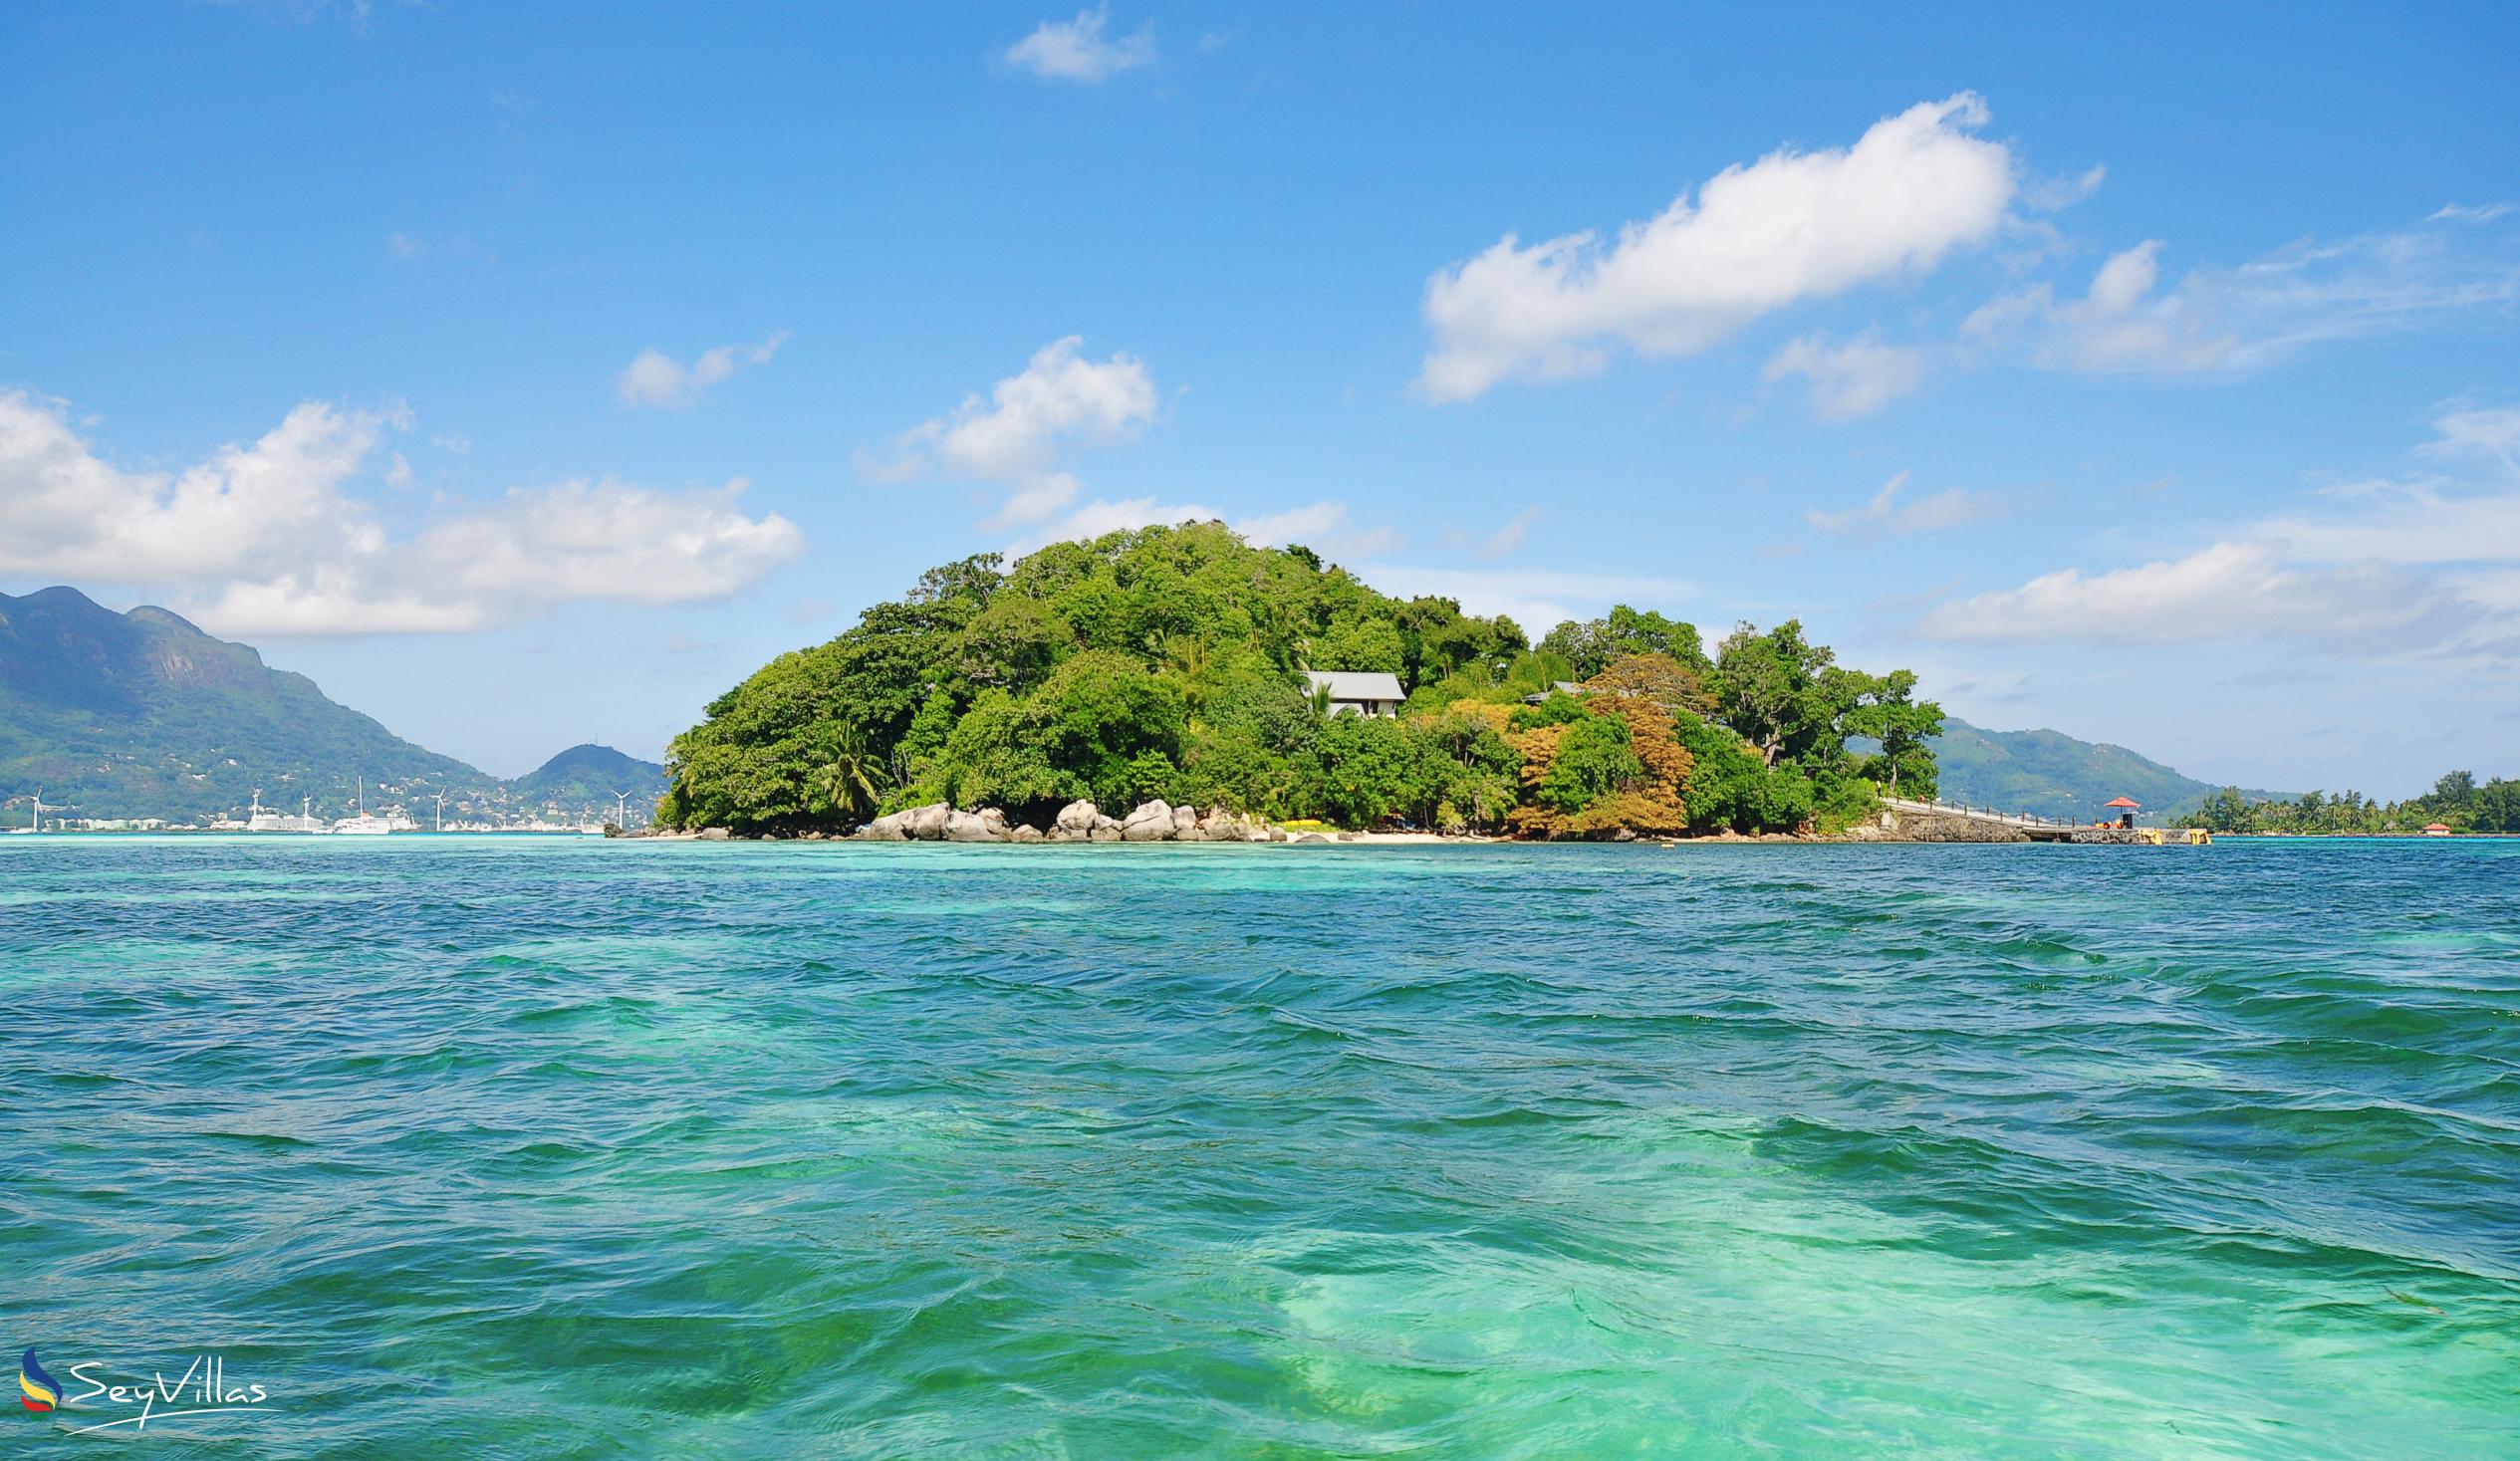 Photo 82: JA Enchanted Island Resort - Location - Round Island (Seychelles)